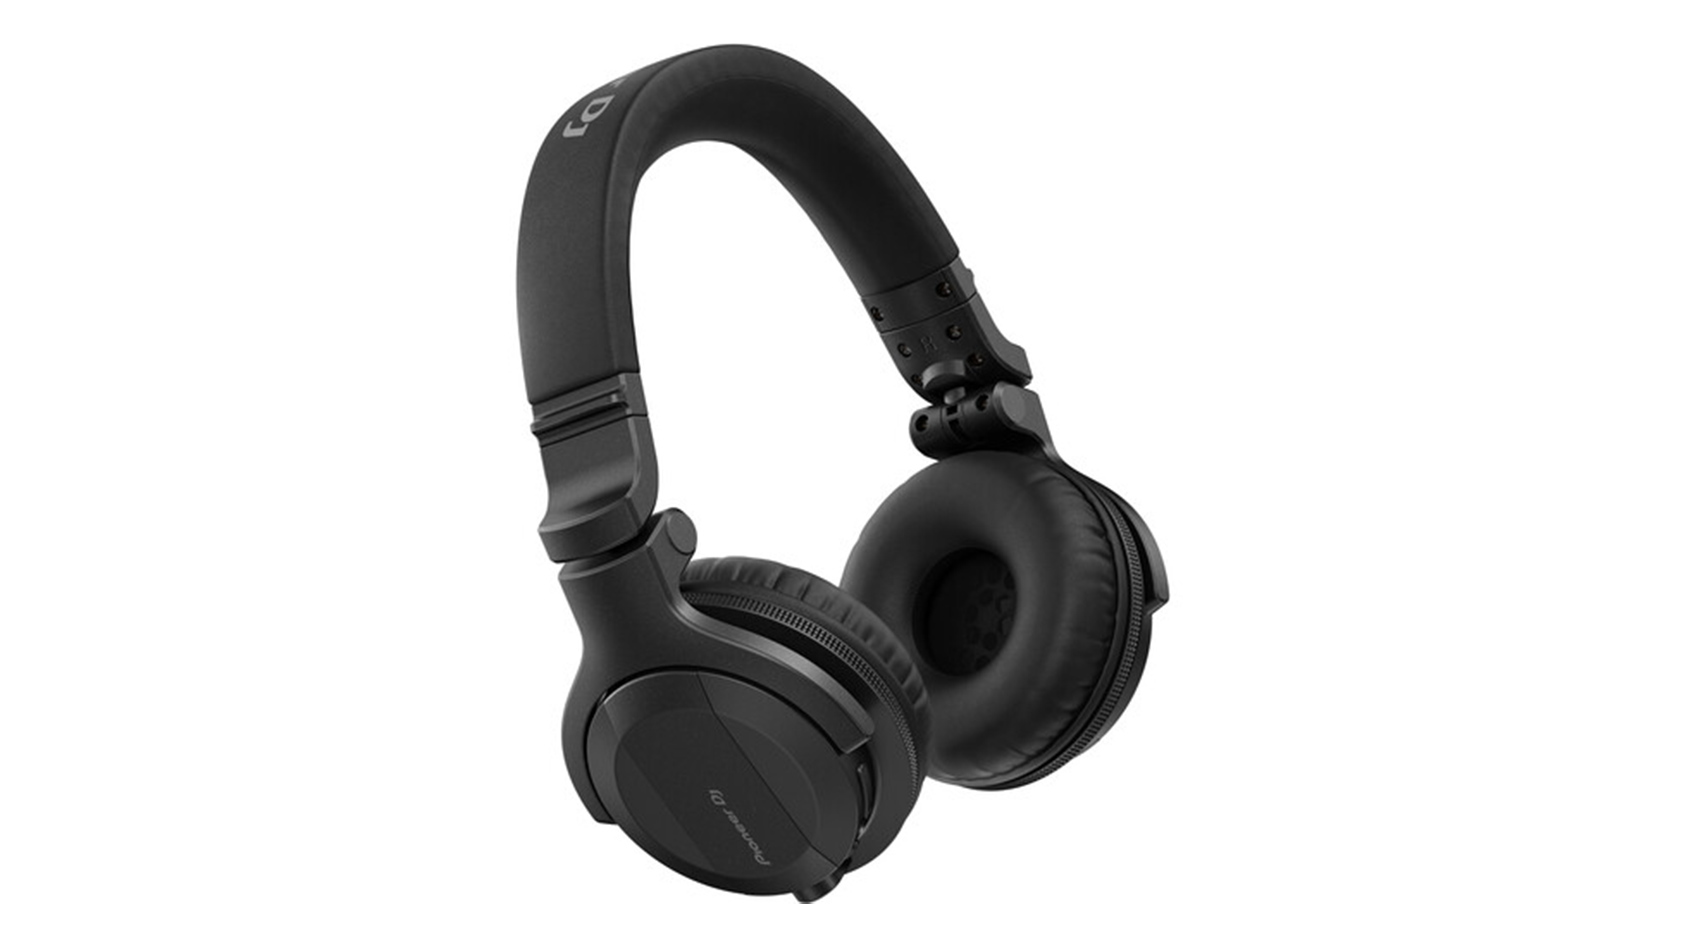 The Pioneer HDJ-CUE1BT headphones in black against a white background.